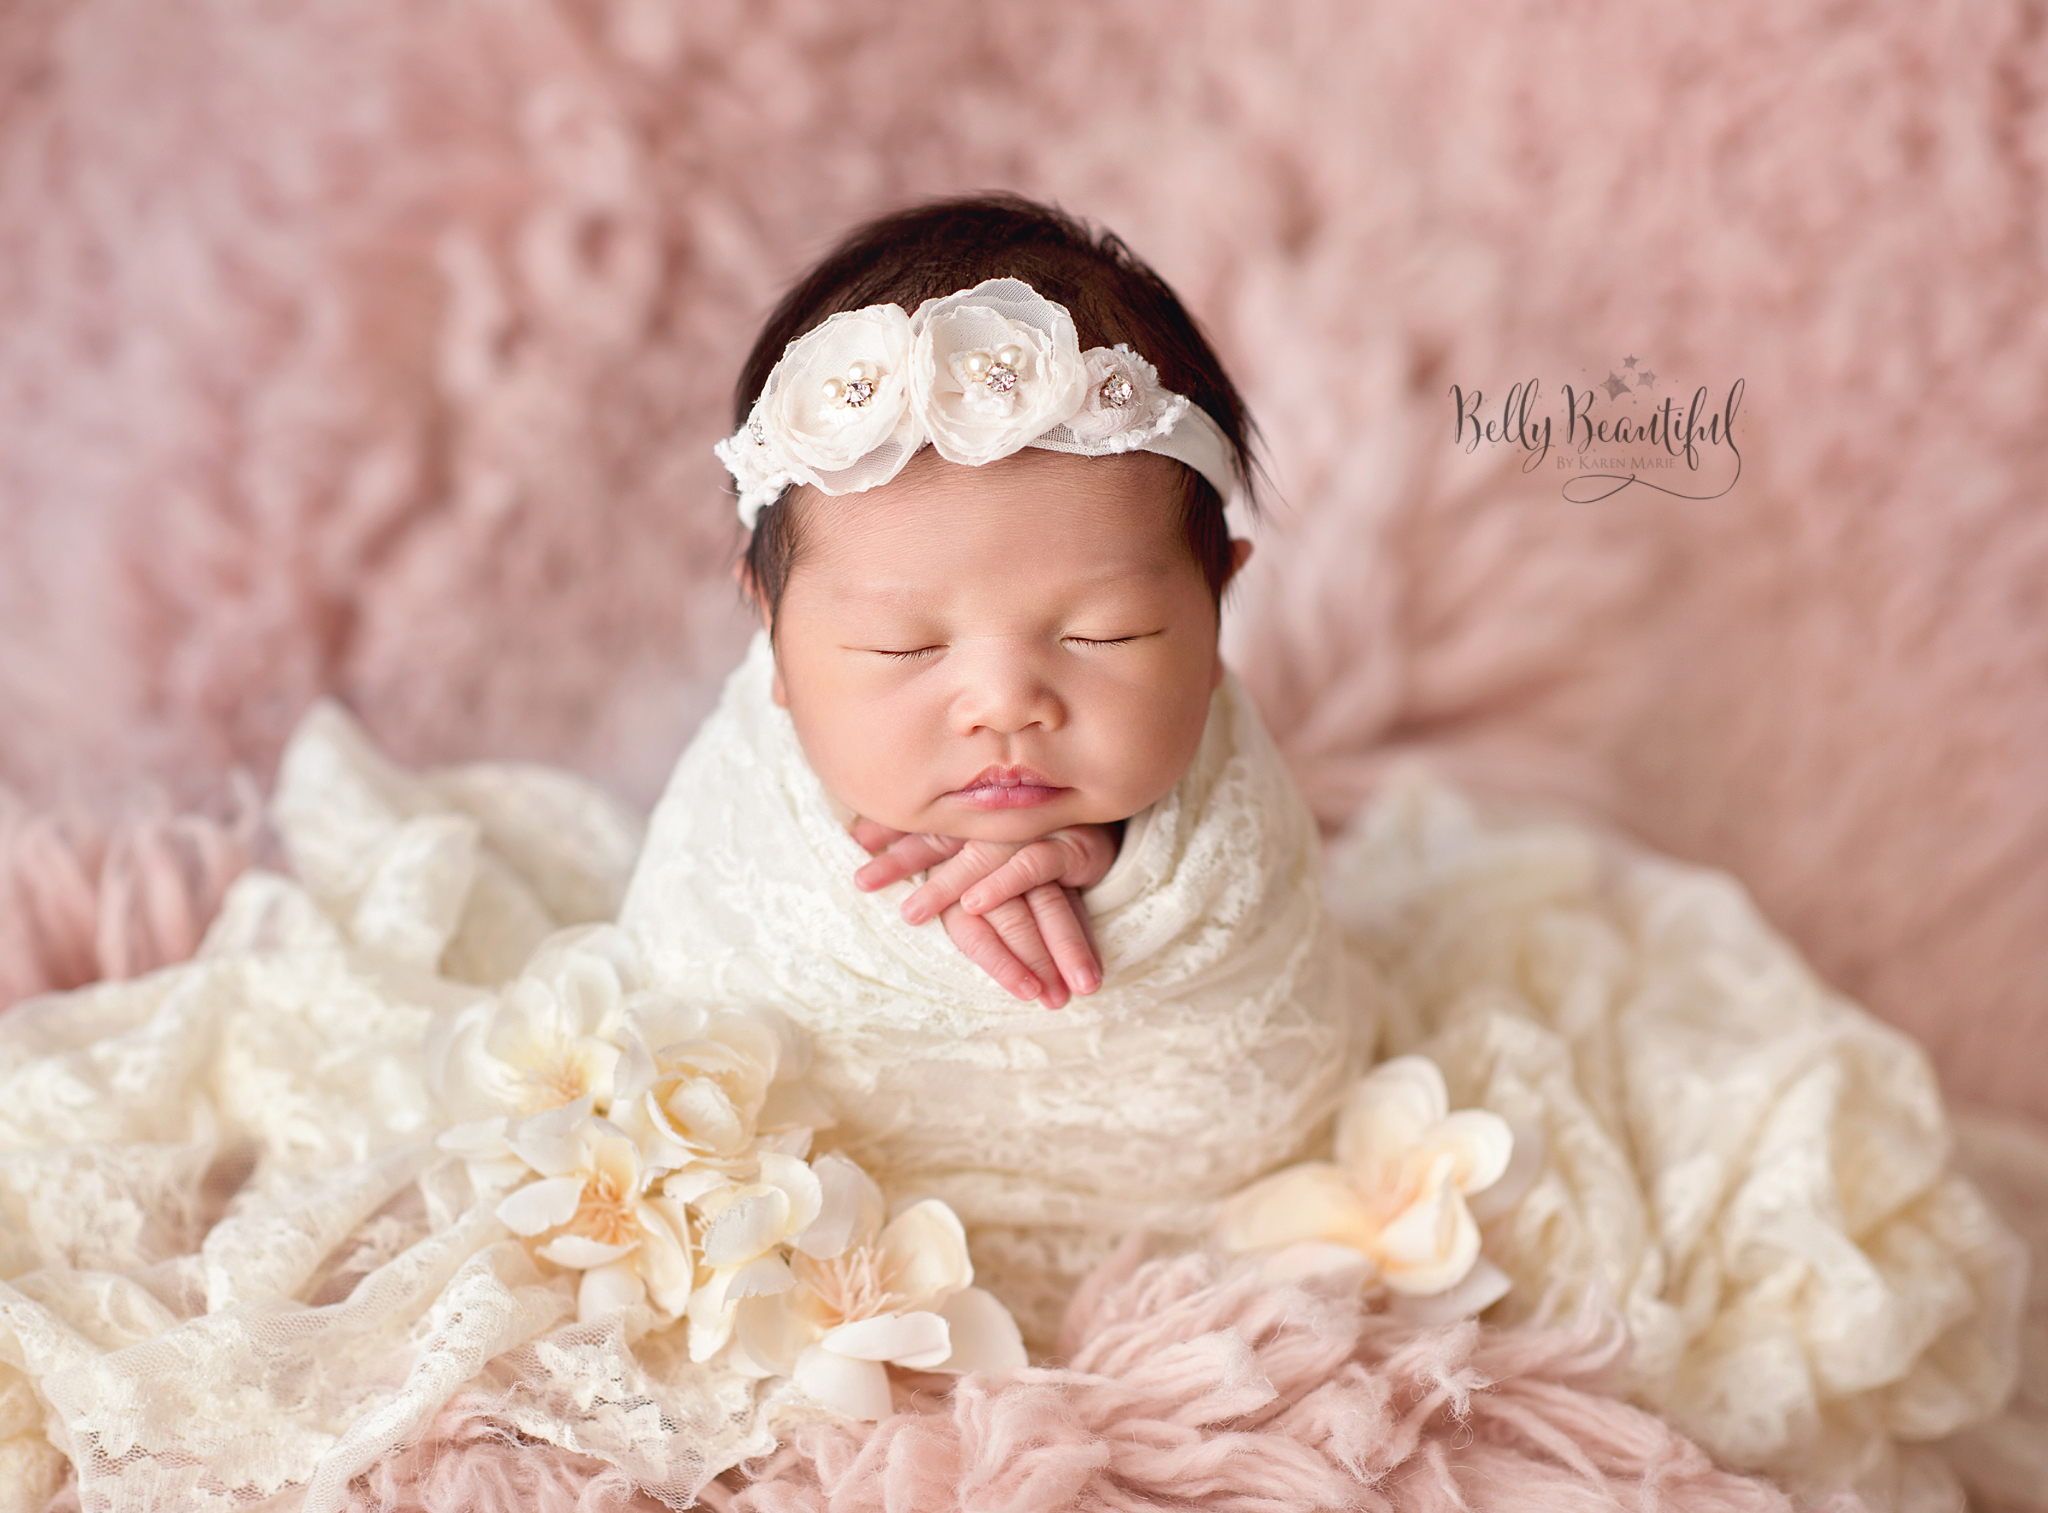 4 Tips for Stunning Newborn Photography